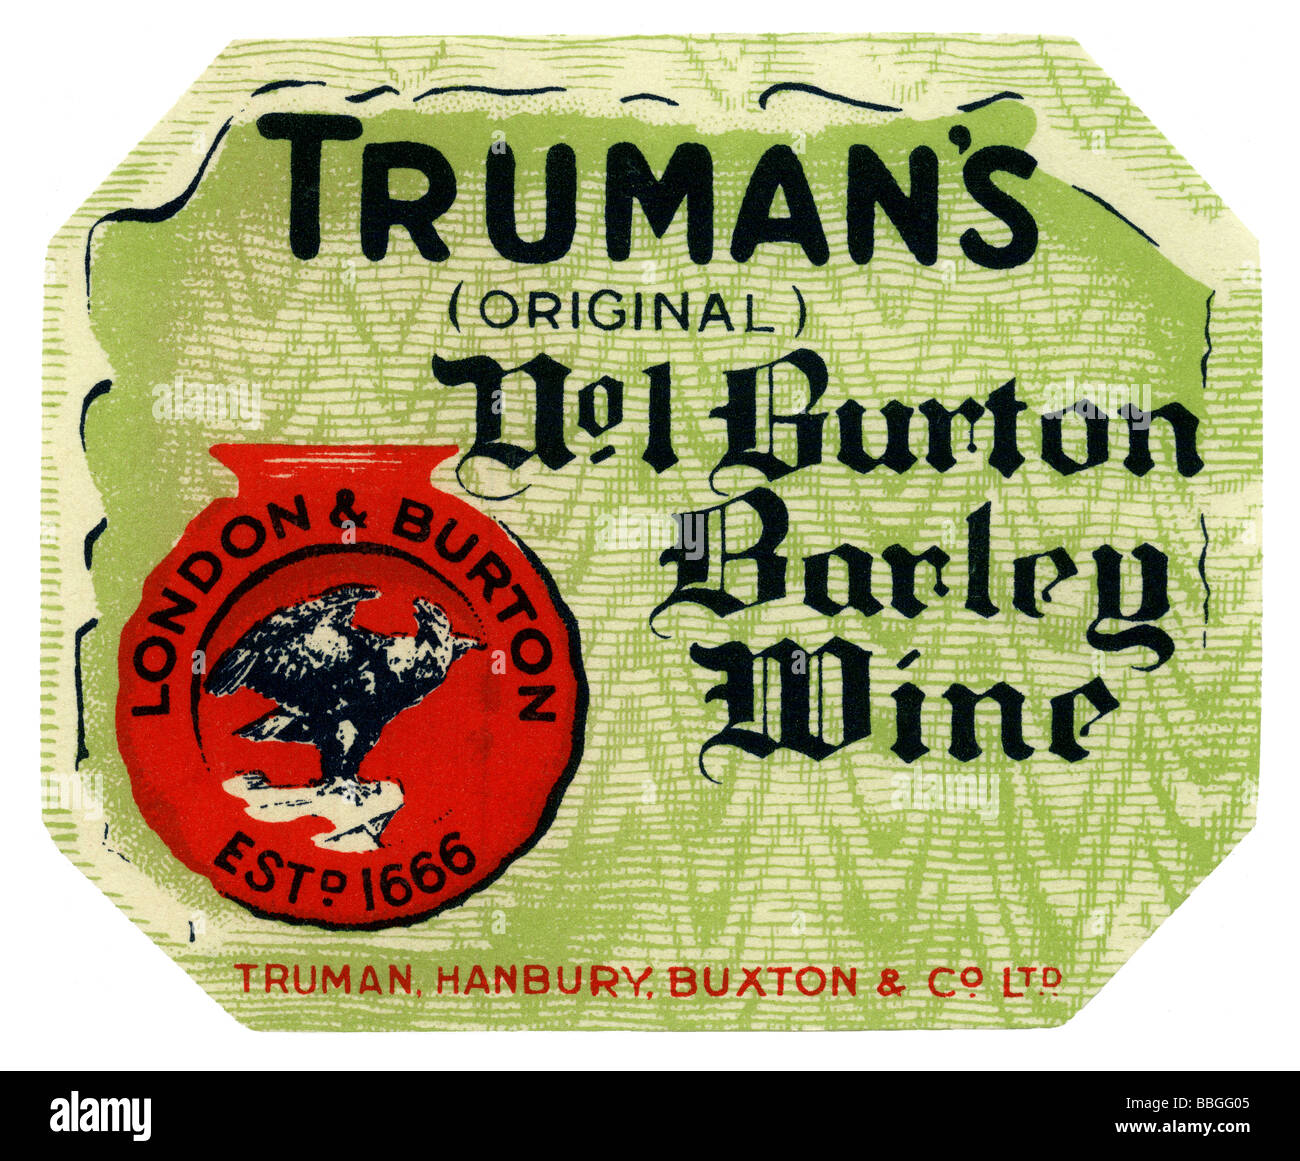 Old British beer label for Truman's No 1 Burton Barley Wine, Staffs Stock Photo